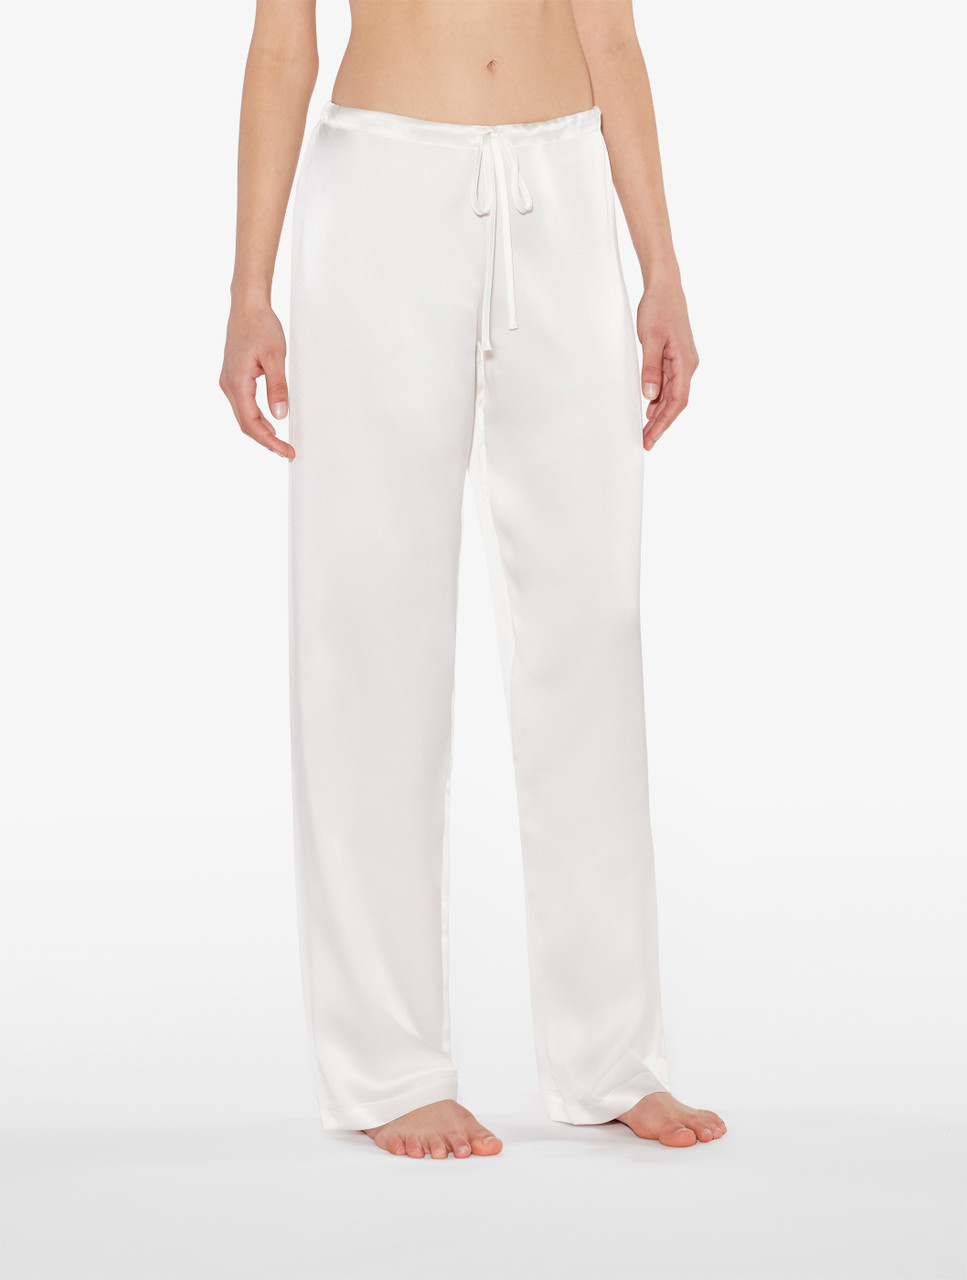 White silk pajama shorts